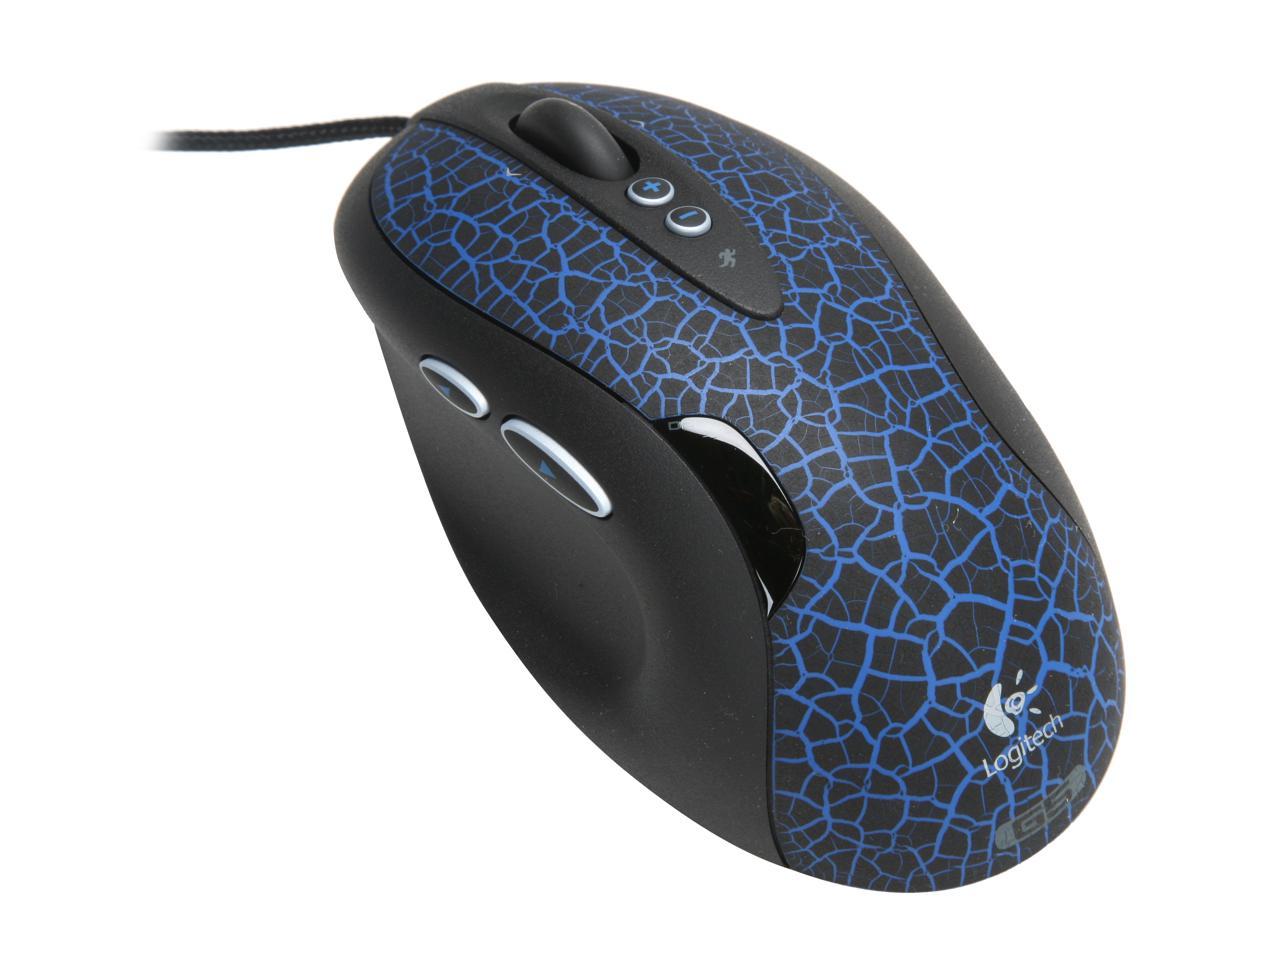 G5 Laser Mouse Newegg.com